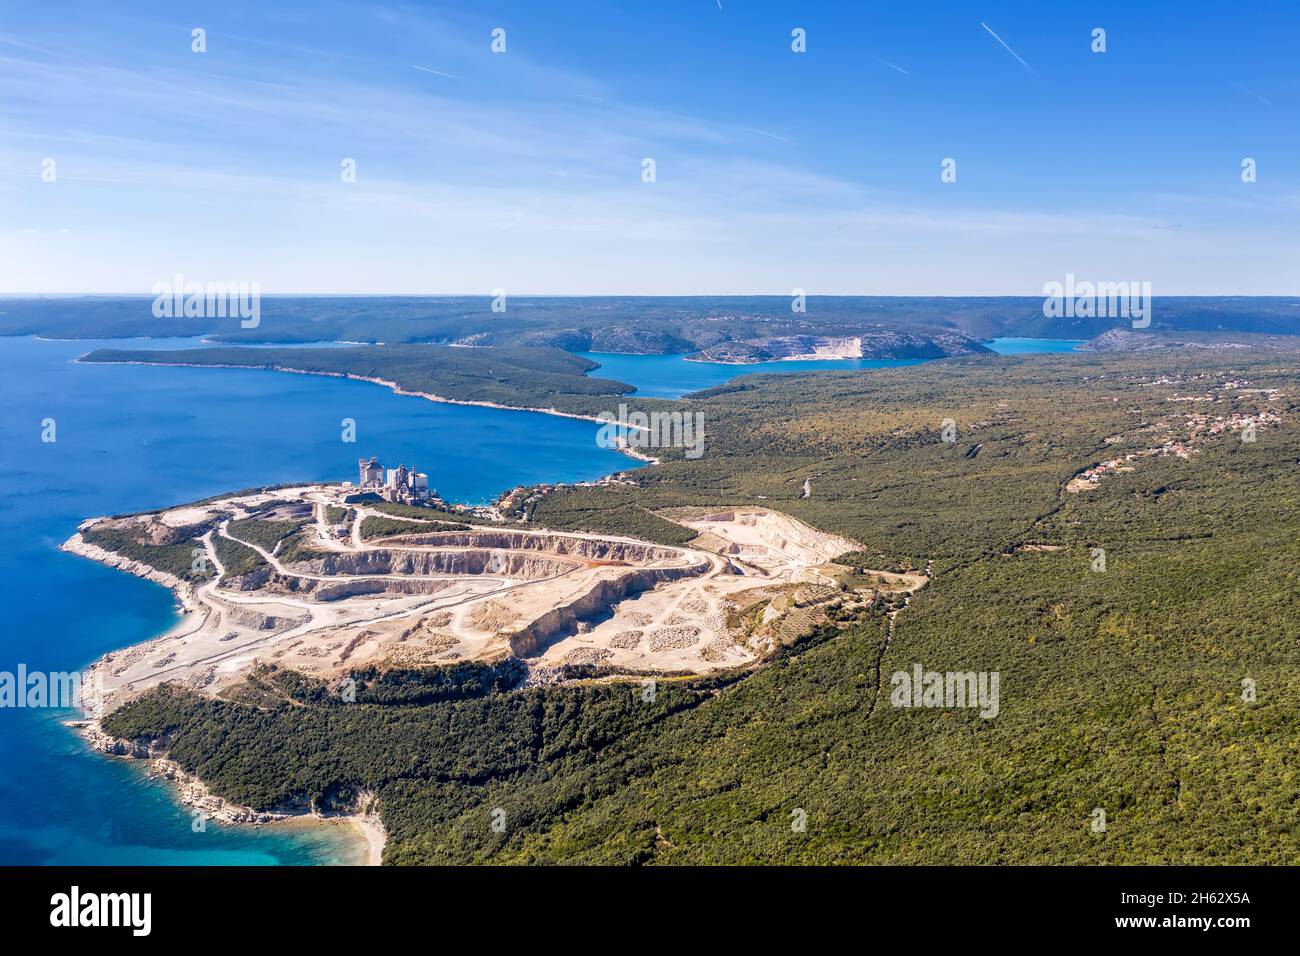 Vista aérea de la bahía de Rasa, en la fábrica de cemento Koromacno, Istria, Croacia Foto de stock